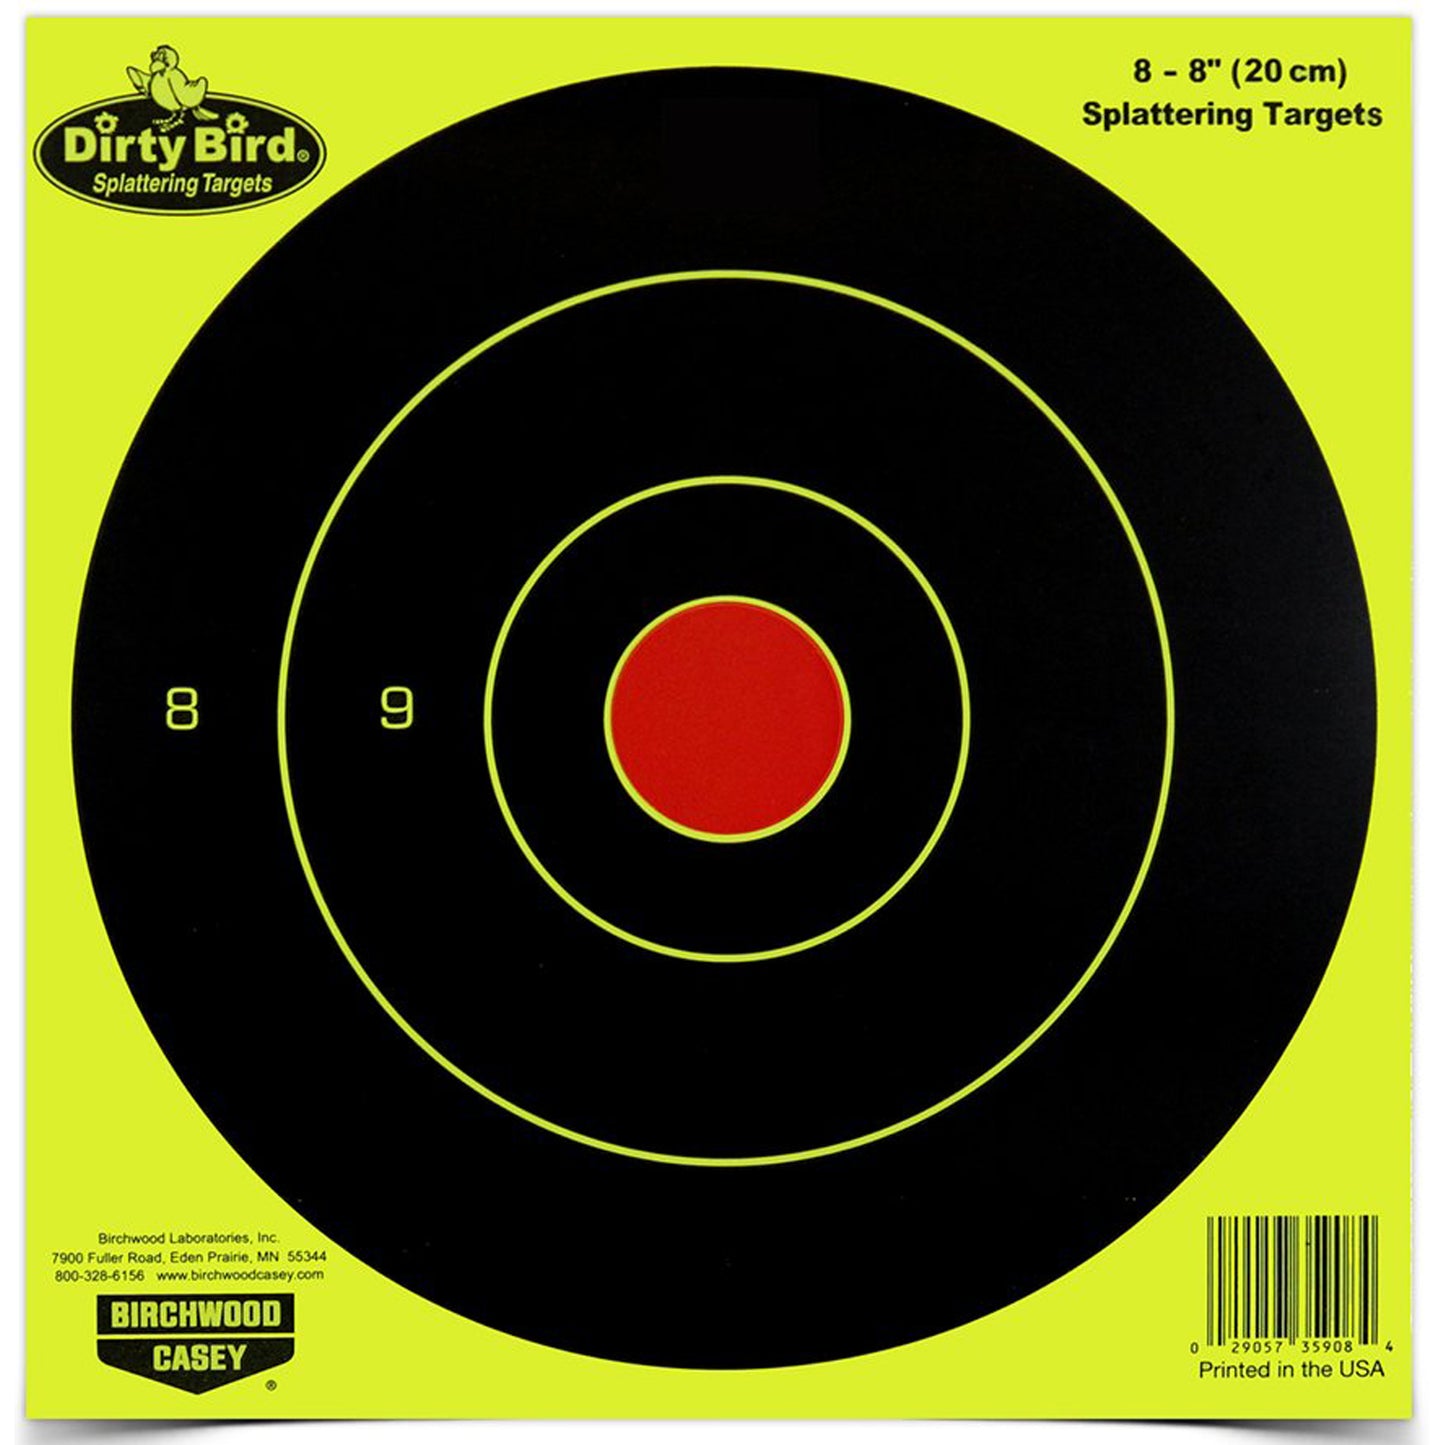 Birchwood Casey, Dirty Bird Target, Bullseye, 8", 8 Targets, Yellow